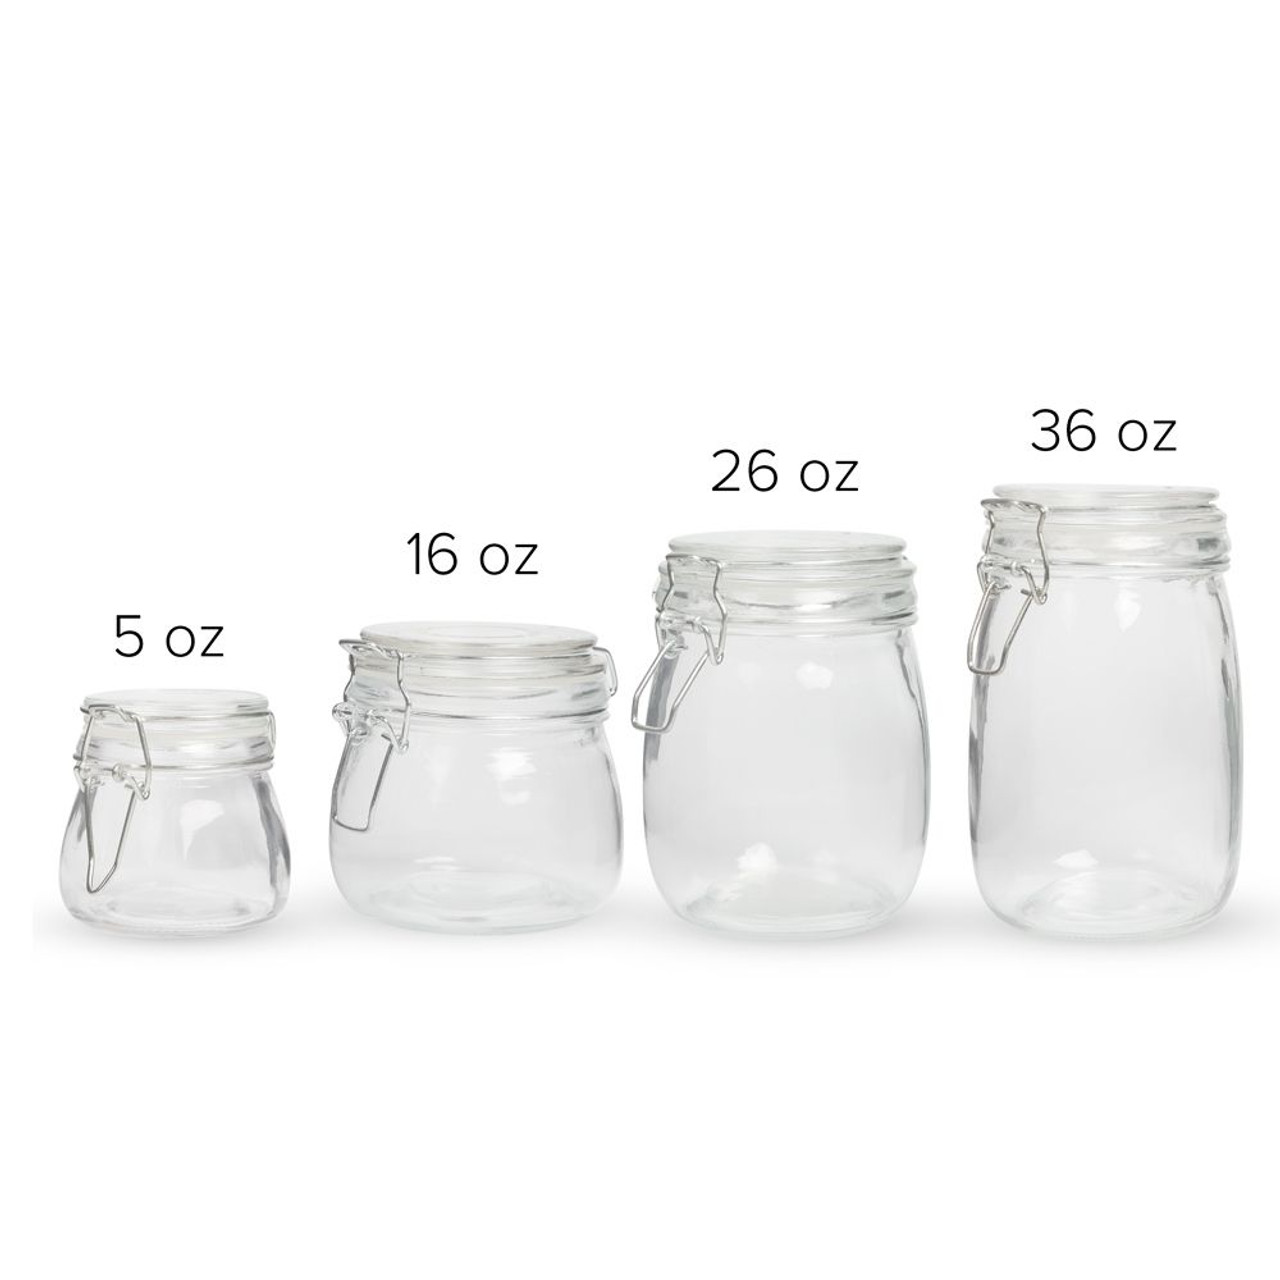 8 oz. Glass Jar with Spoon (Chrome Finish Screw Top Lid)